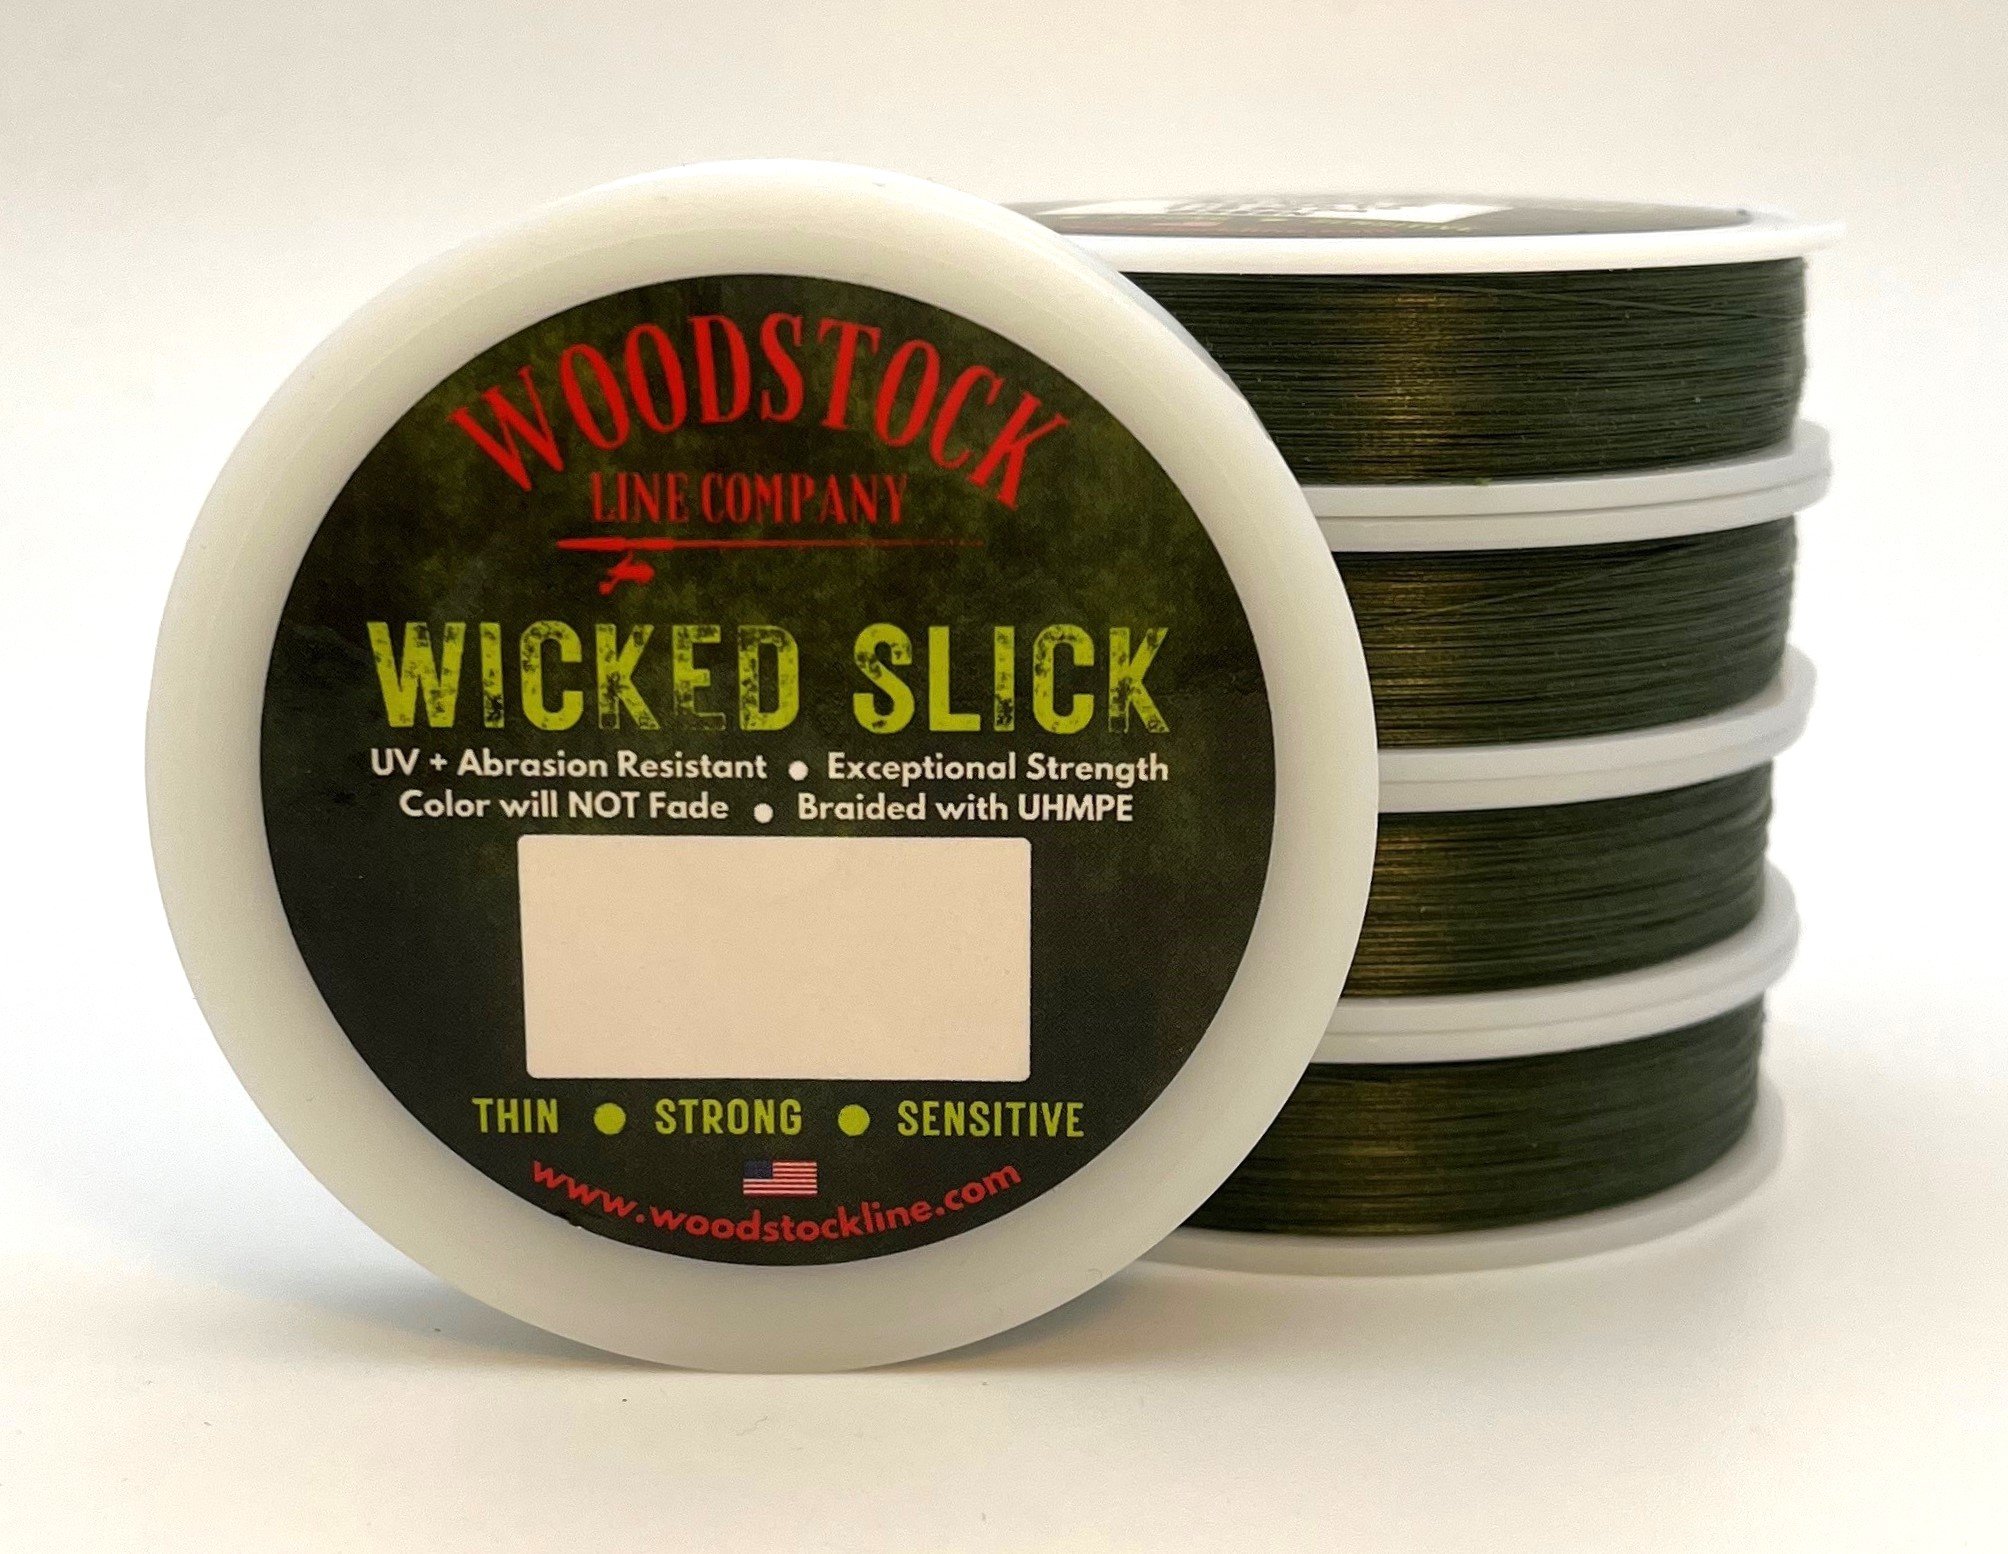 Wicked Slick — Woodstock Line